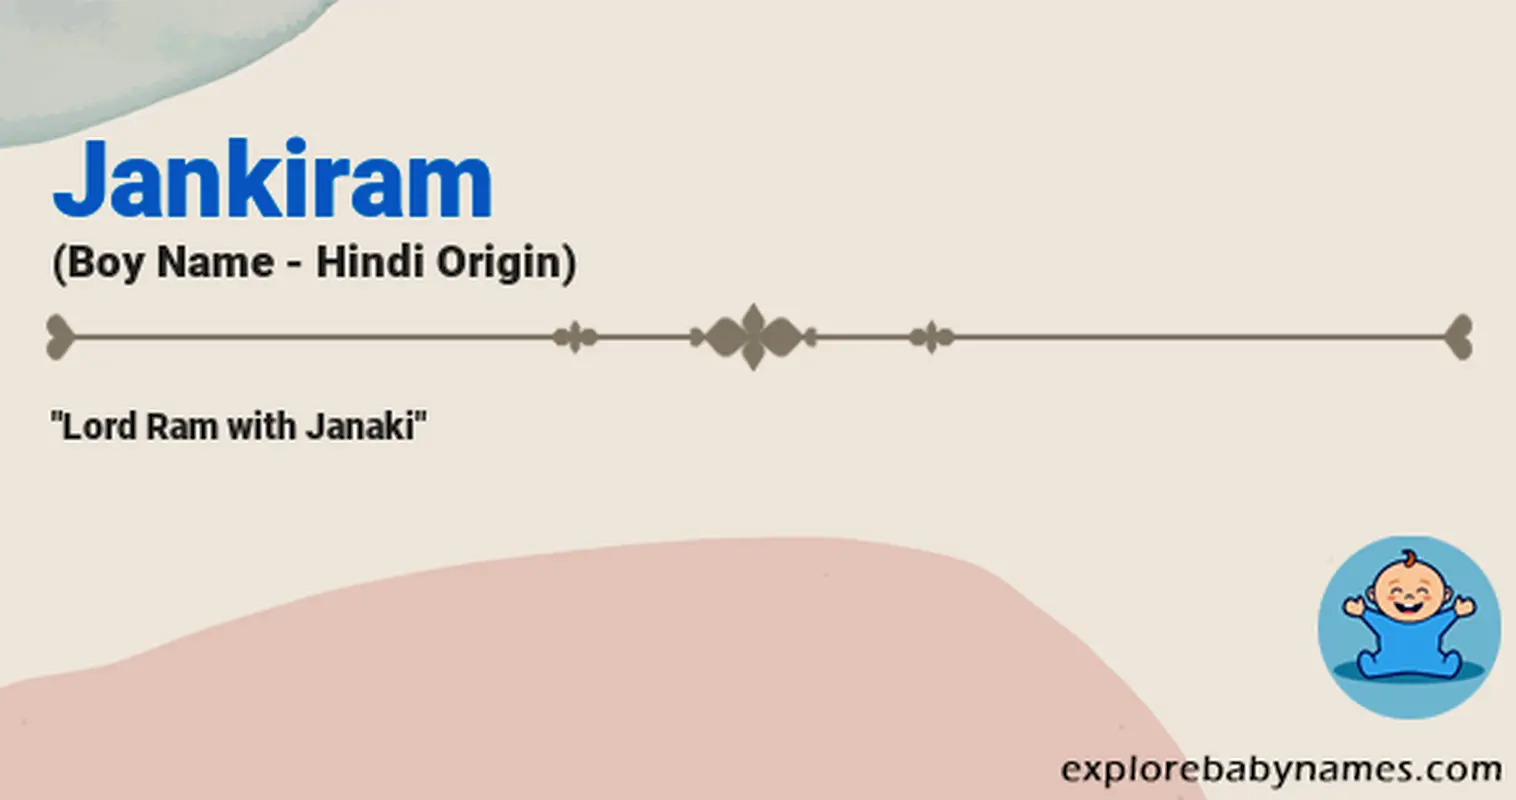 Meaning of Jankiram